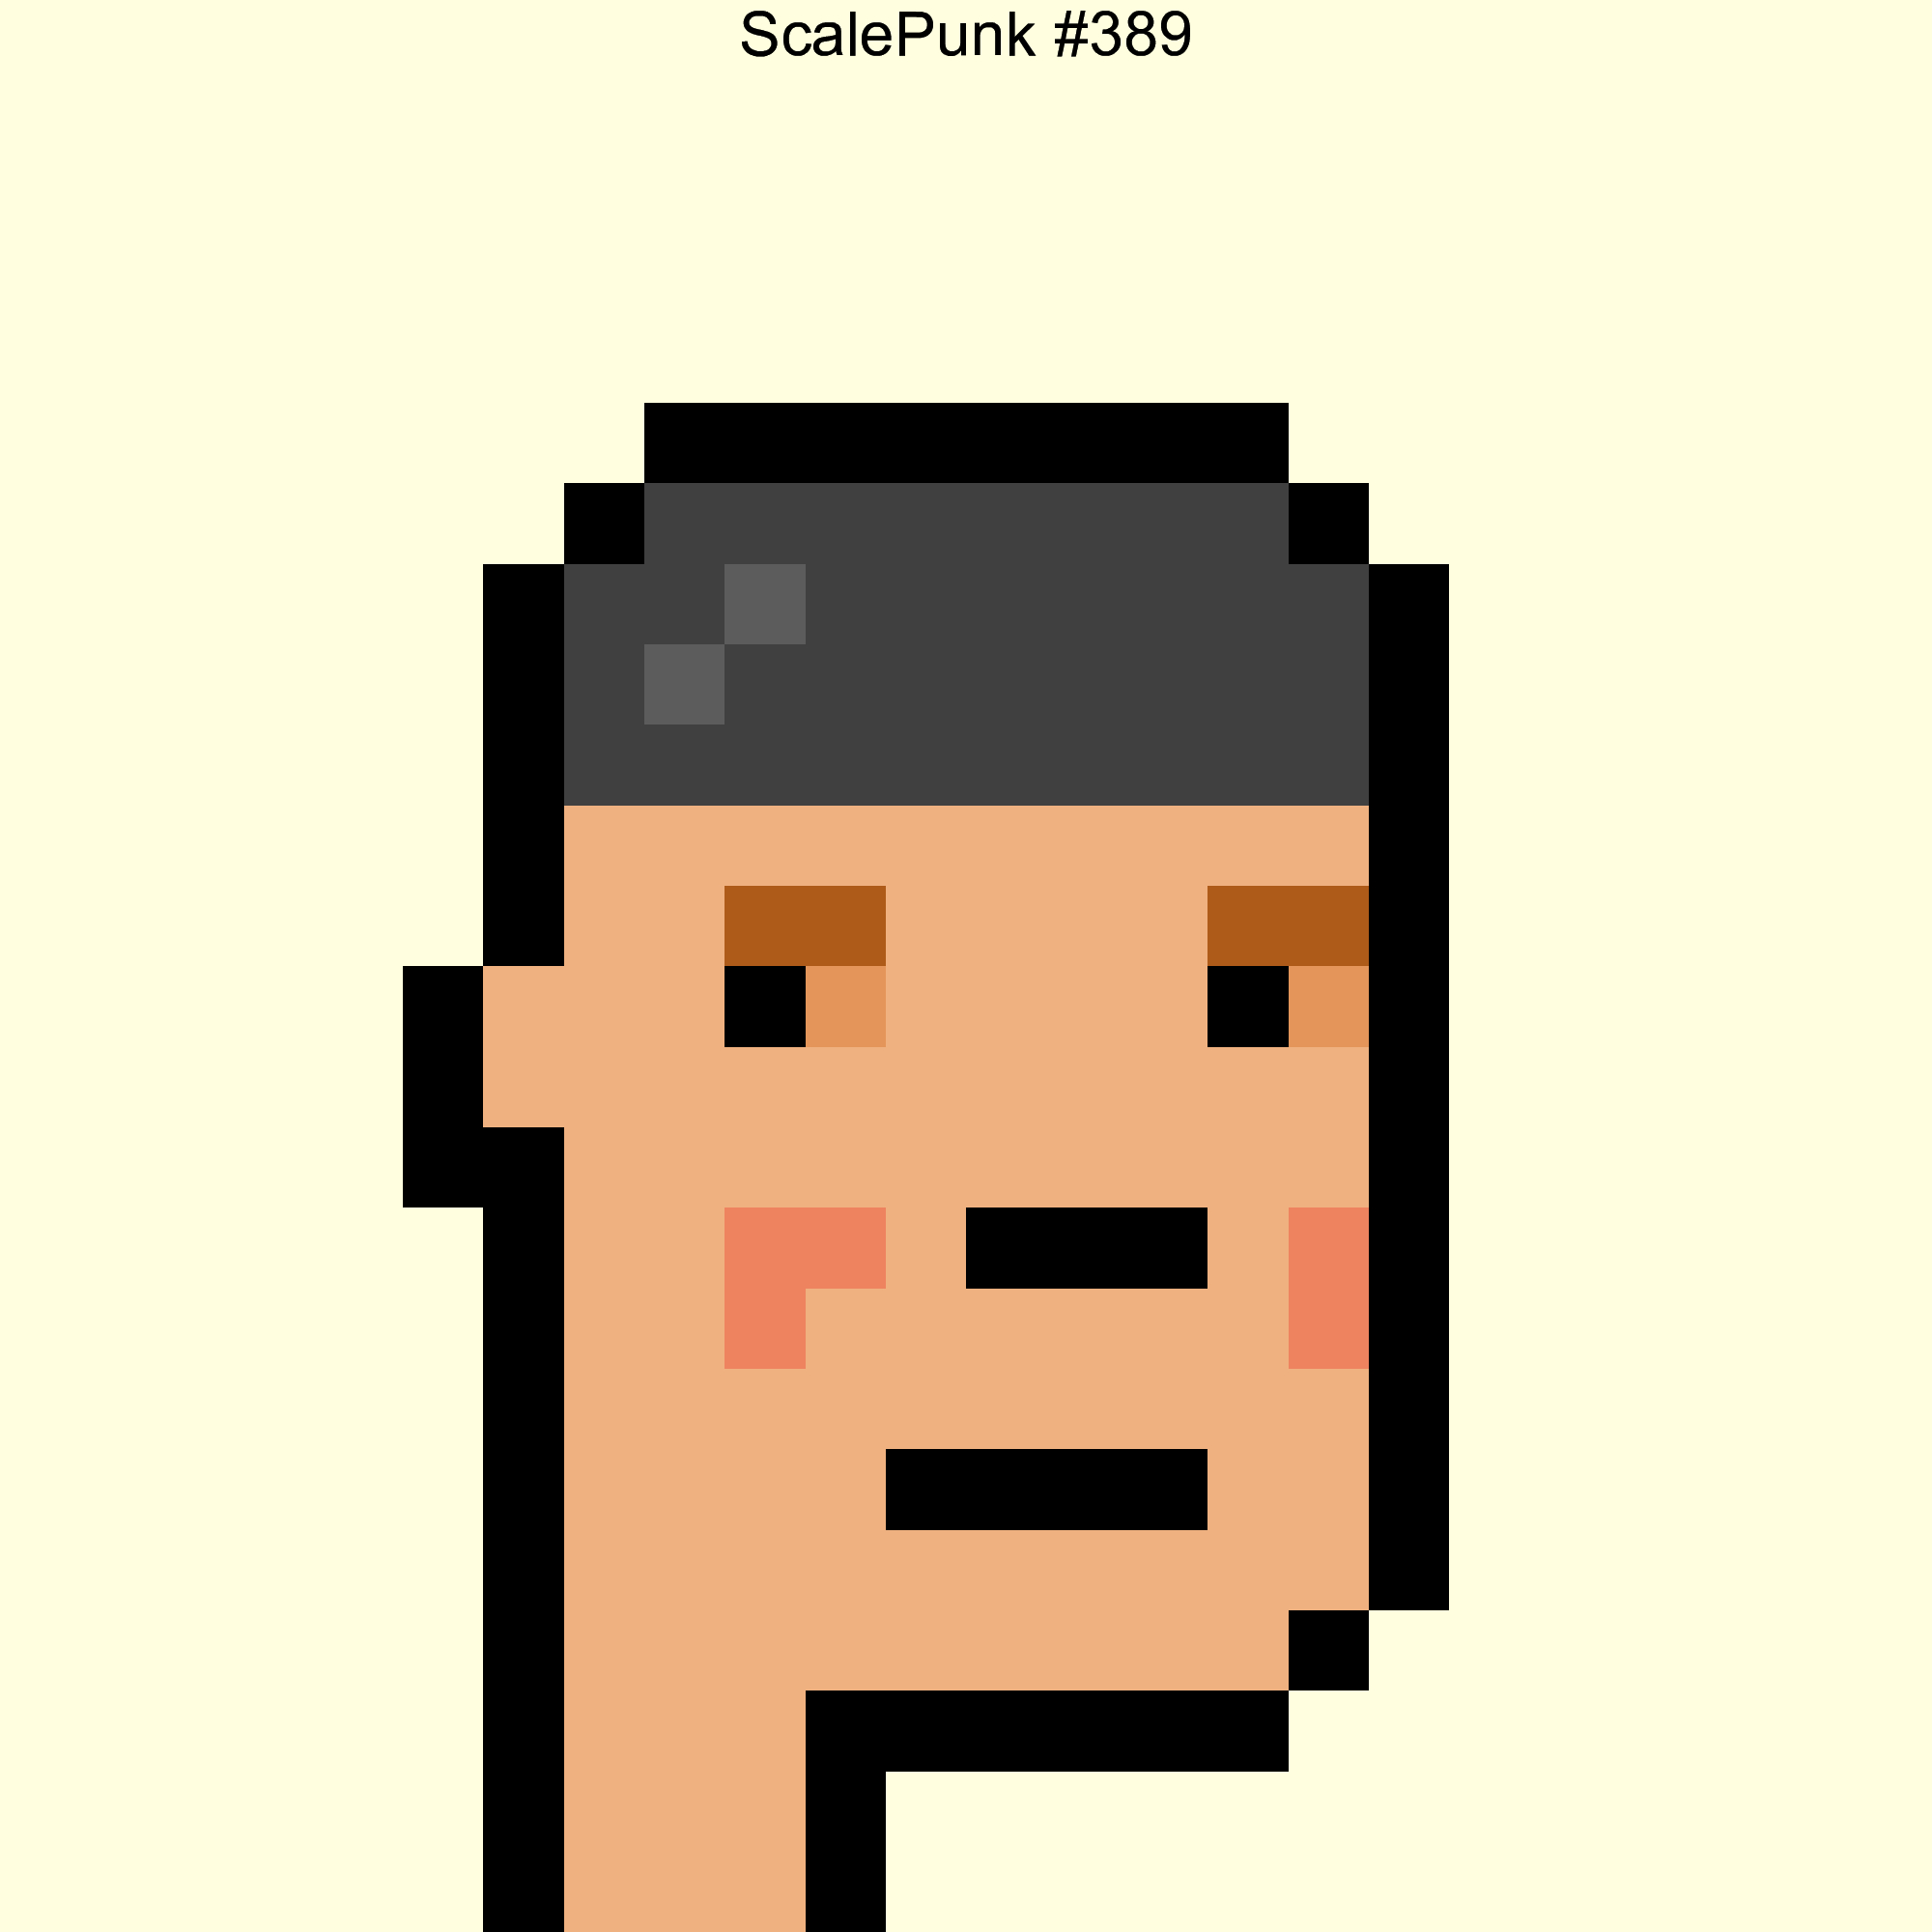 Punk 389